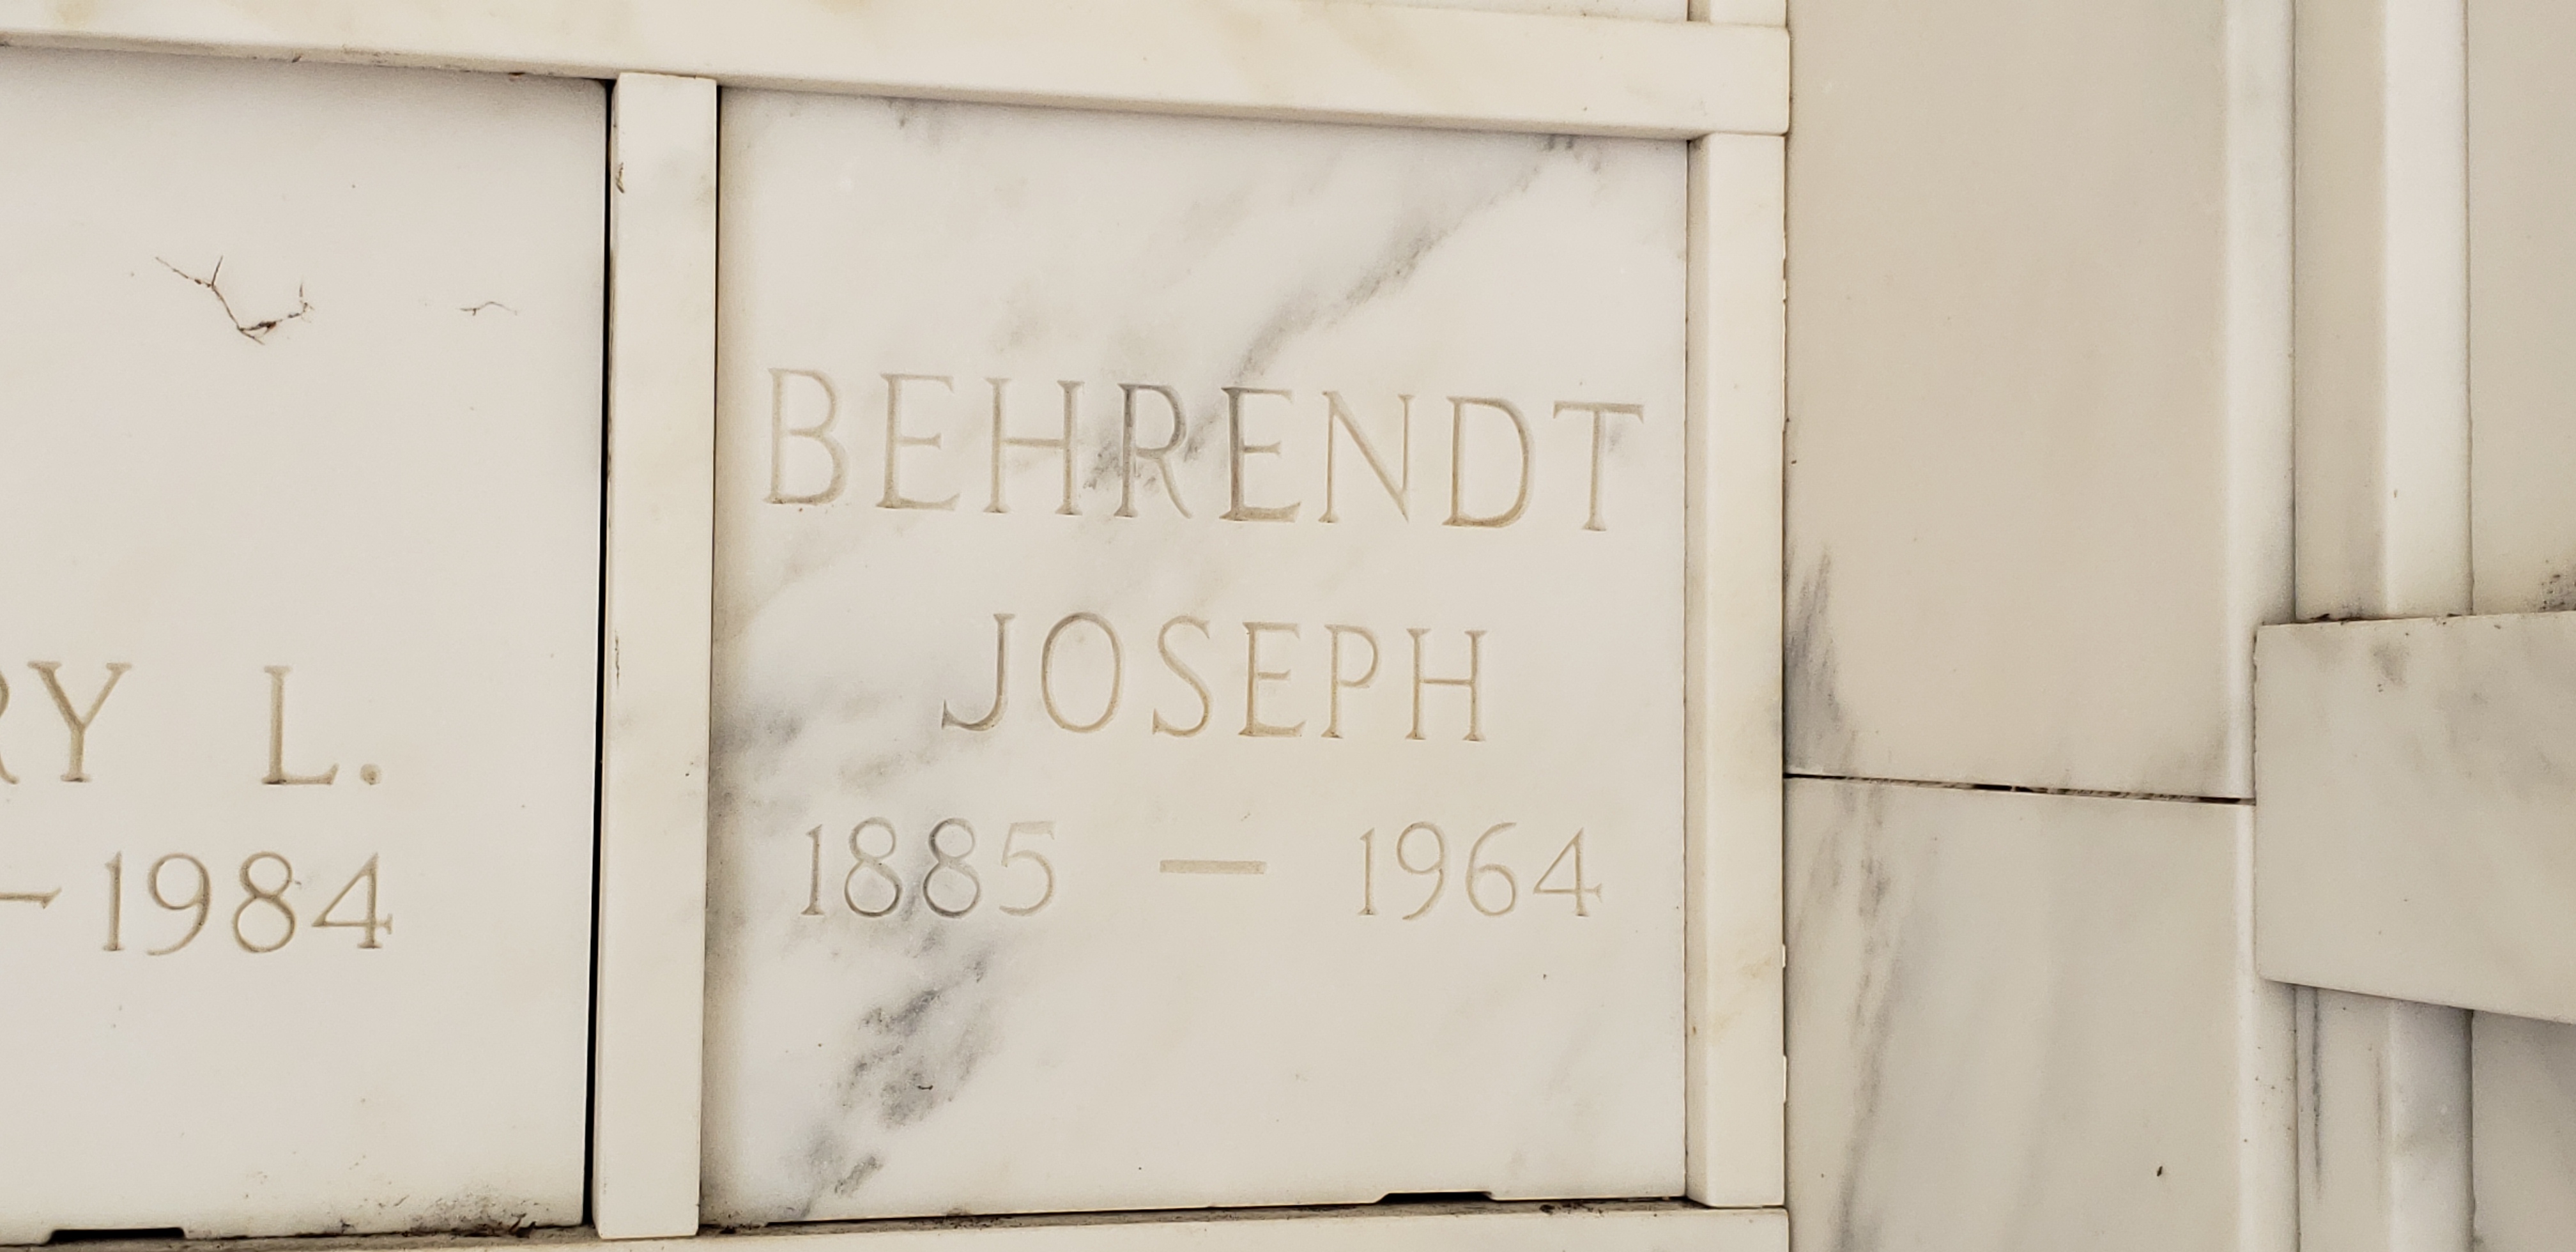 Joseph Behrendt